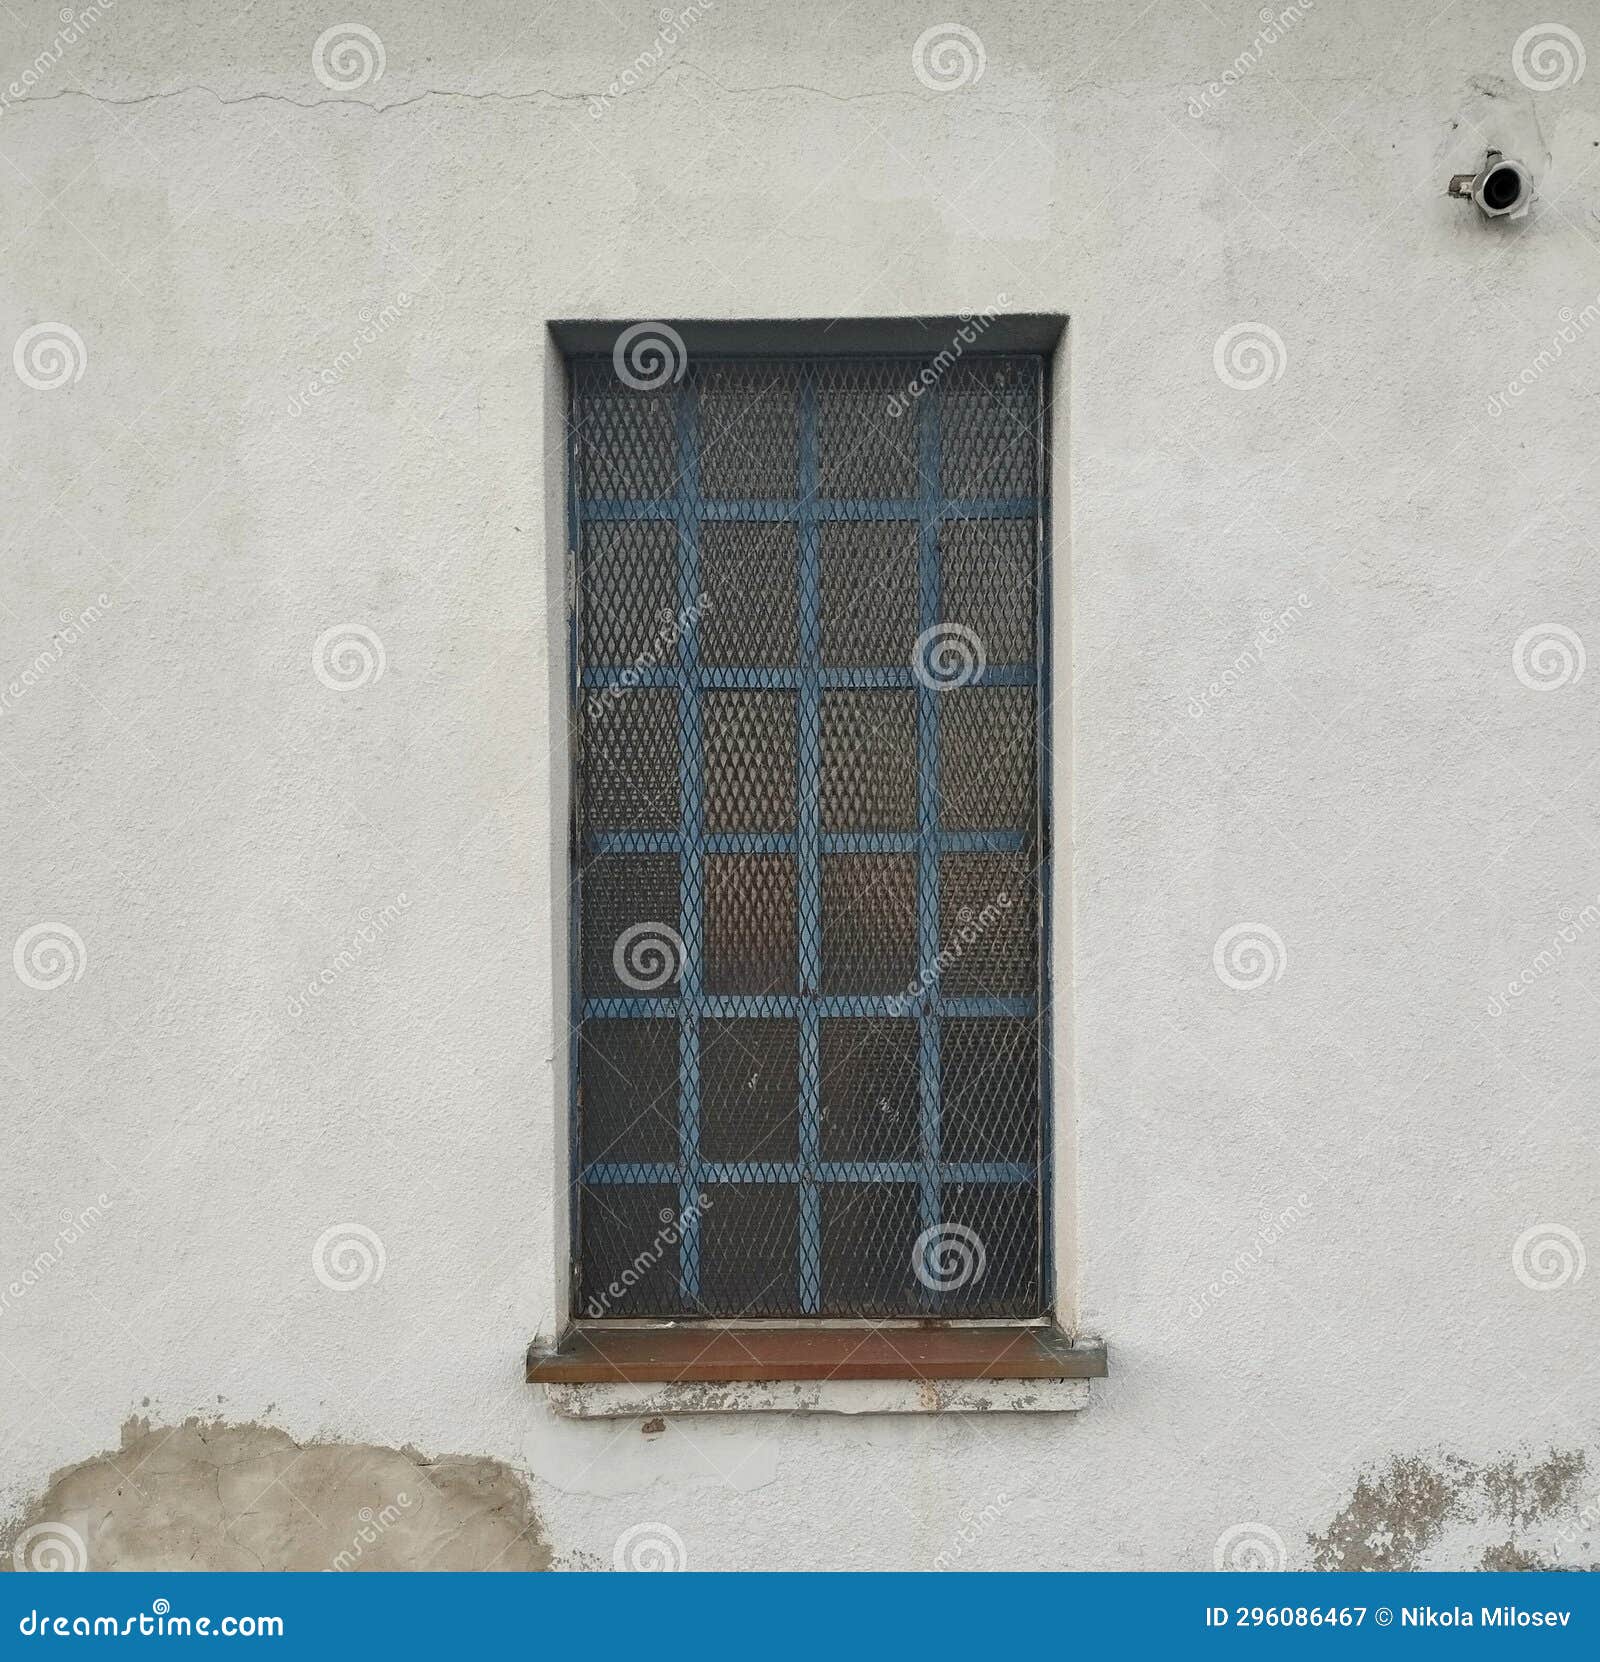 gridded window on industrial buliding